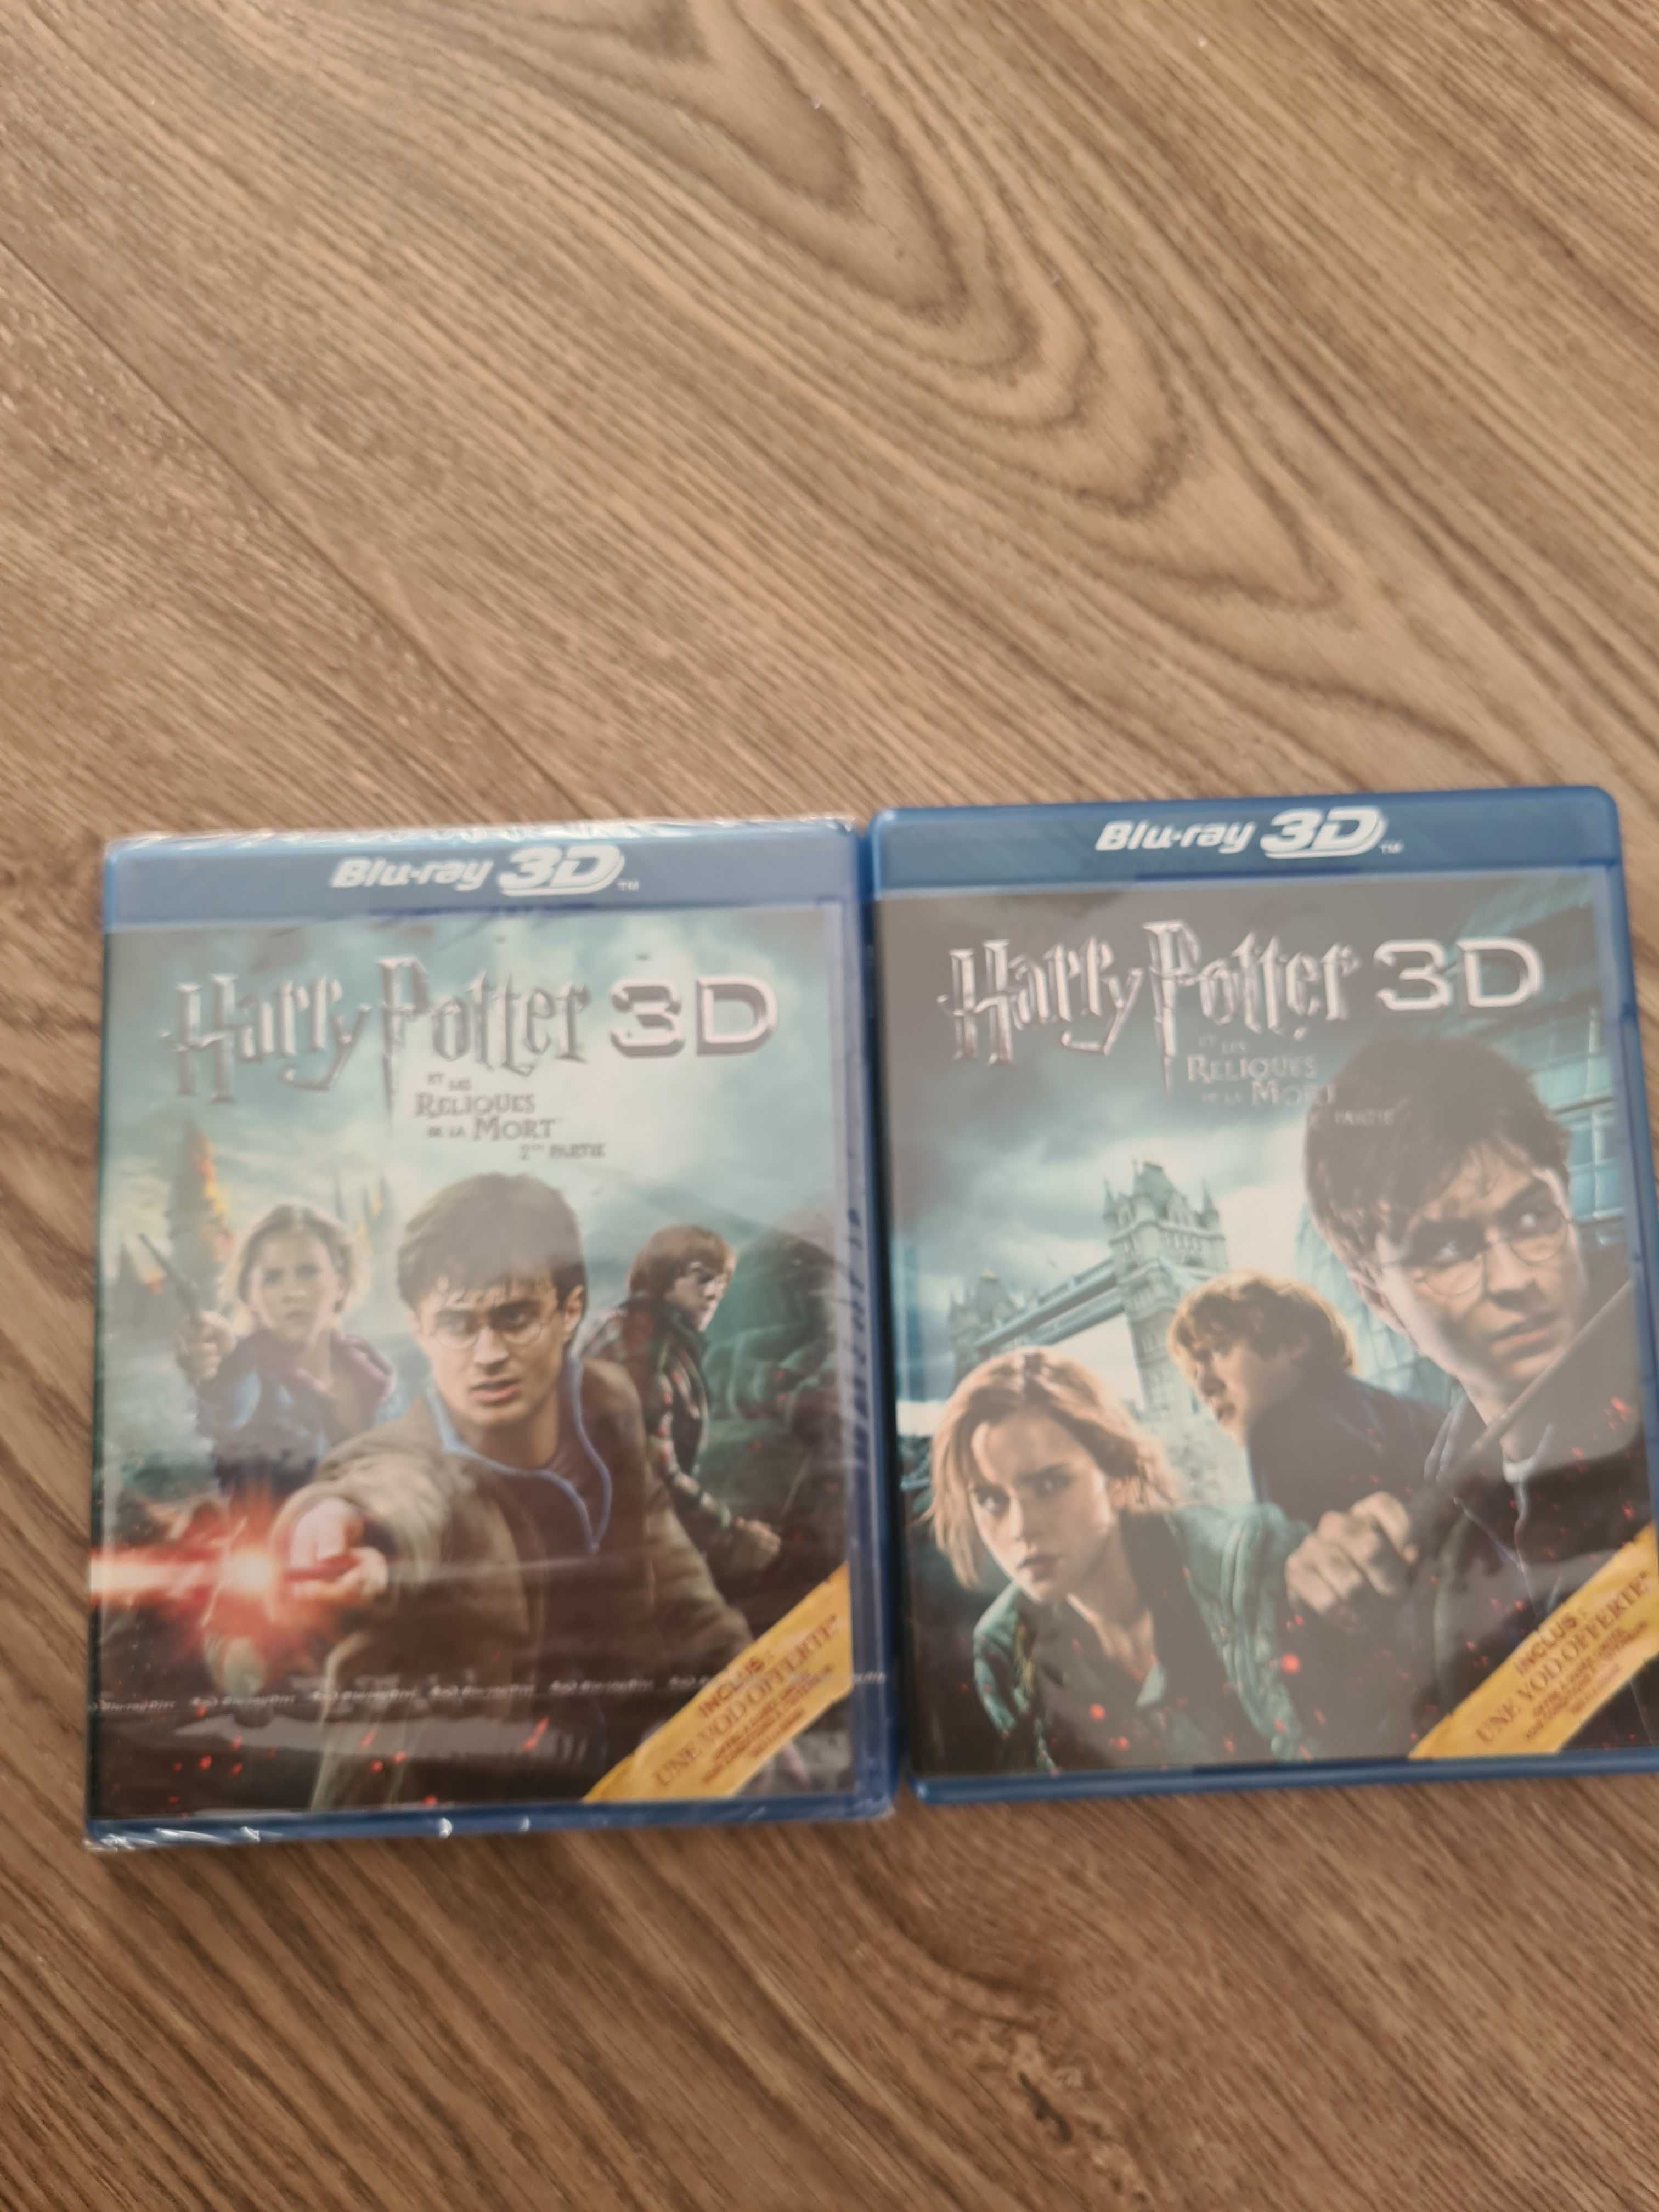 Harry Potter 3D blue- ray